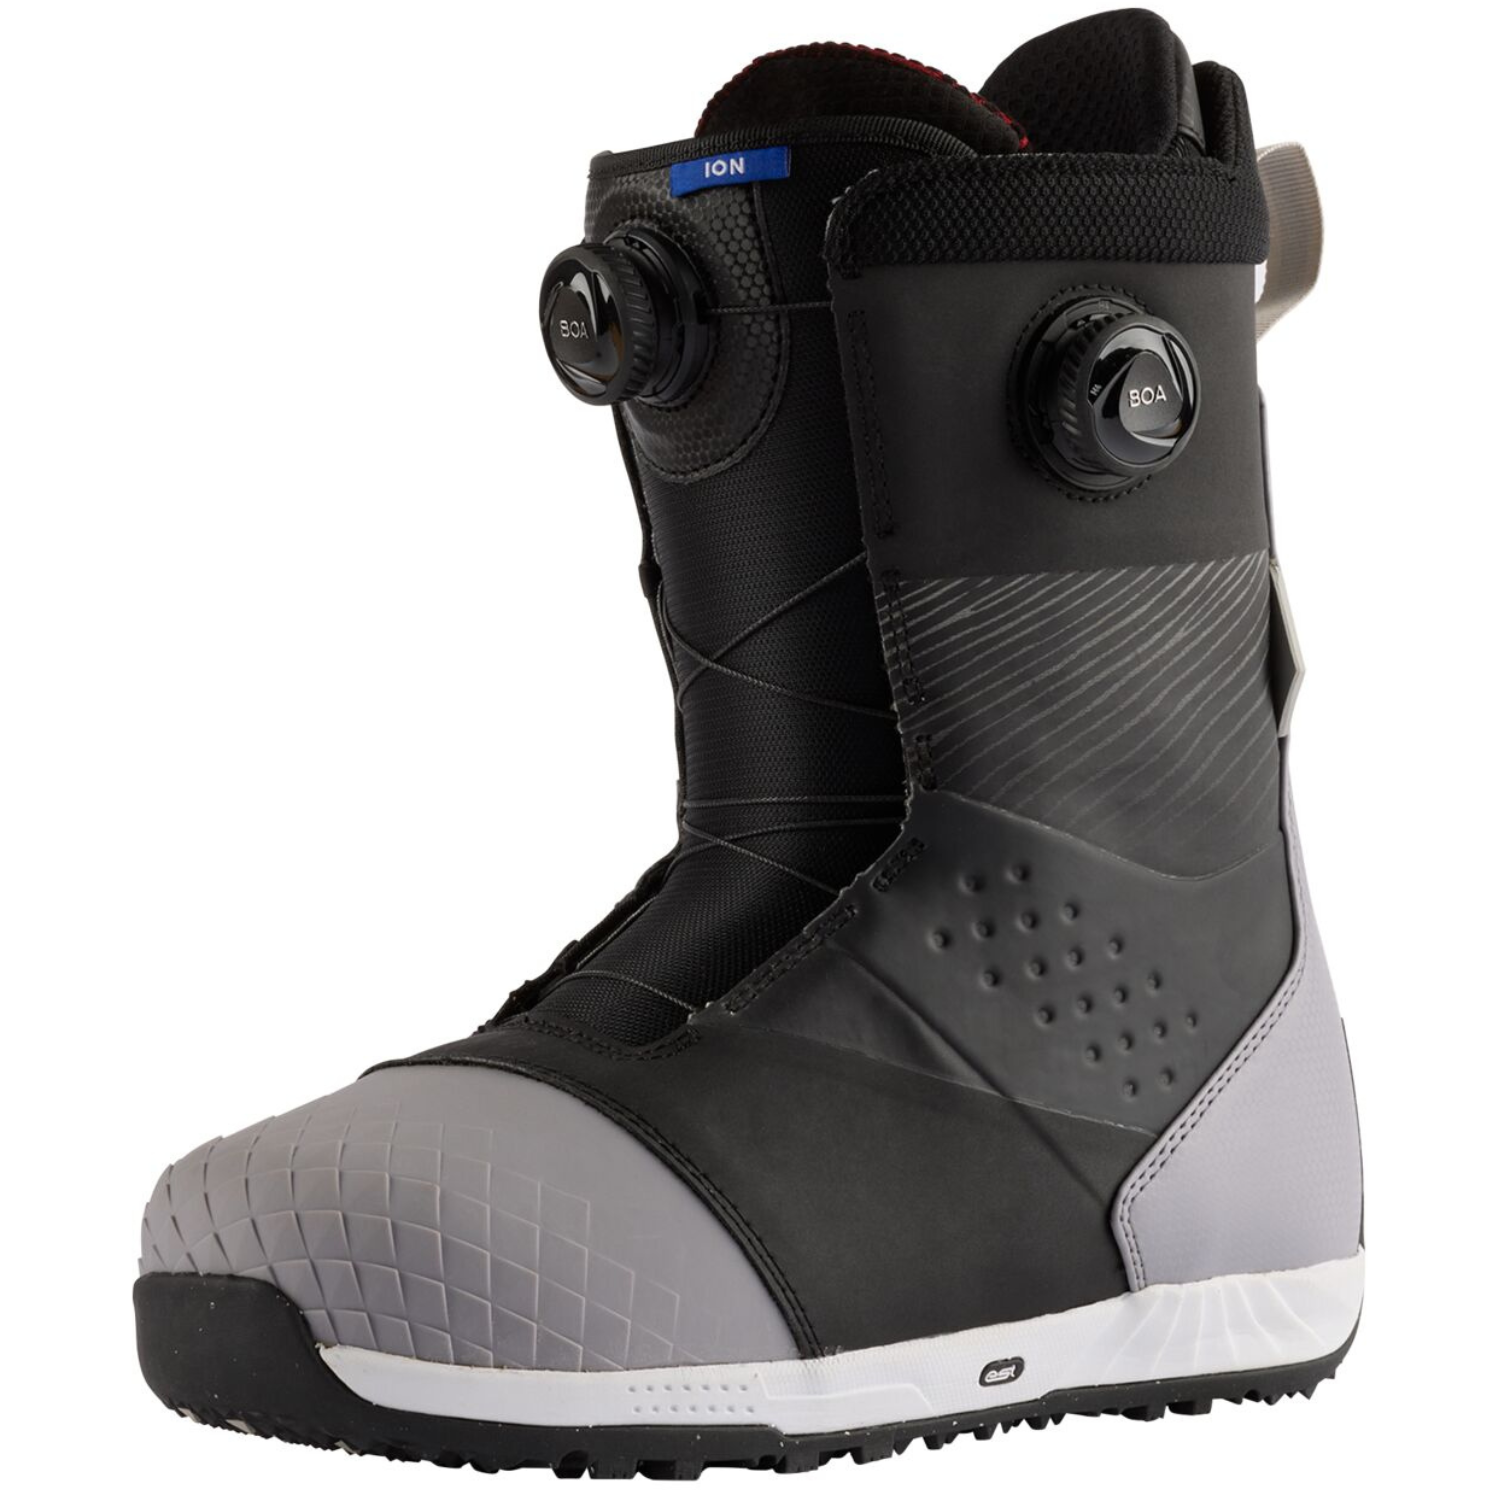 Burton Ion Boa 2023 - Men's Snowboard Boots